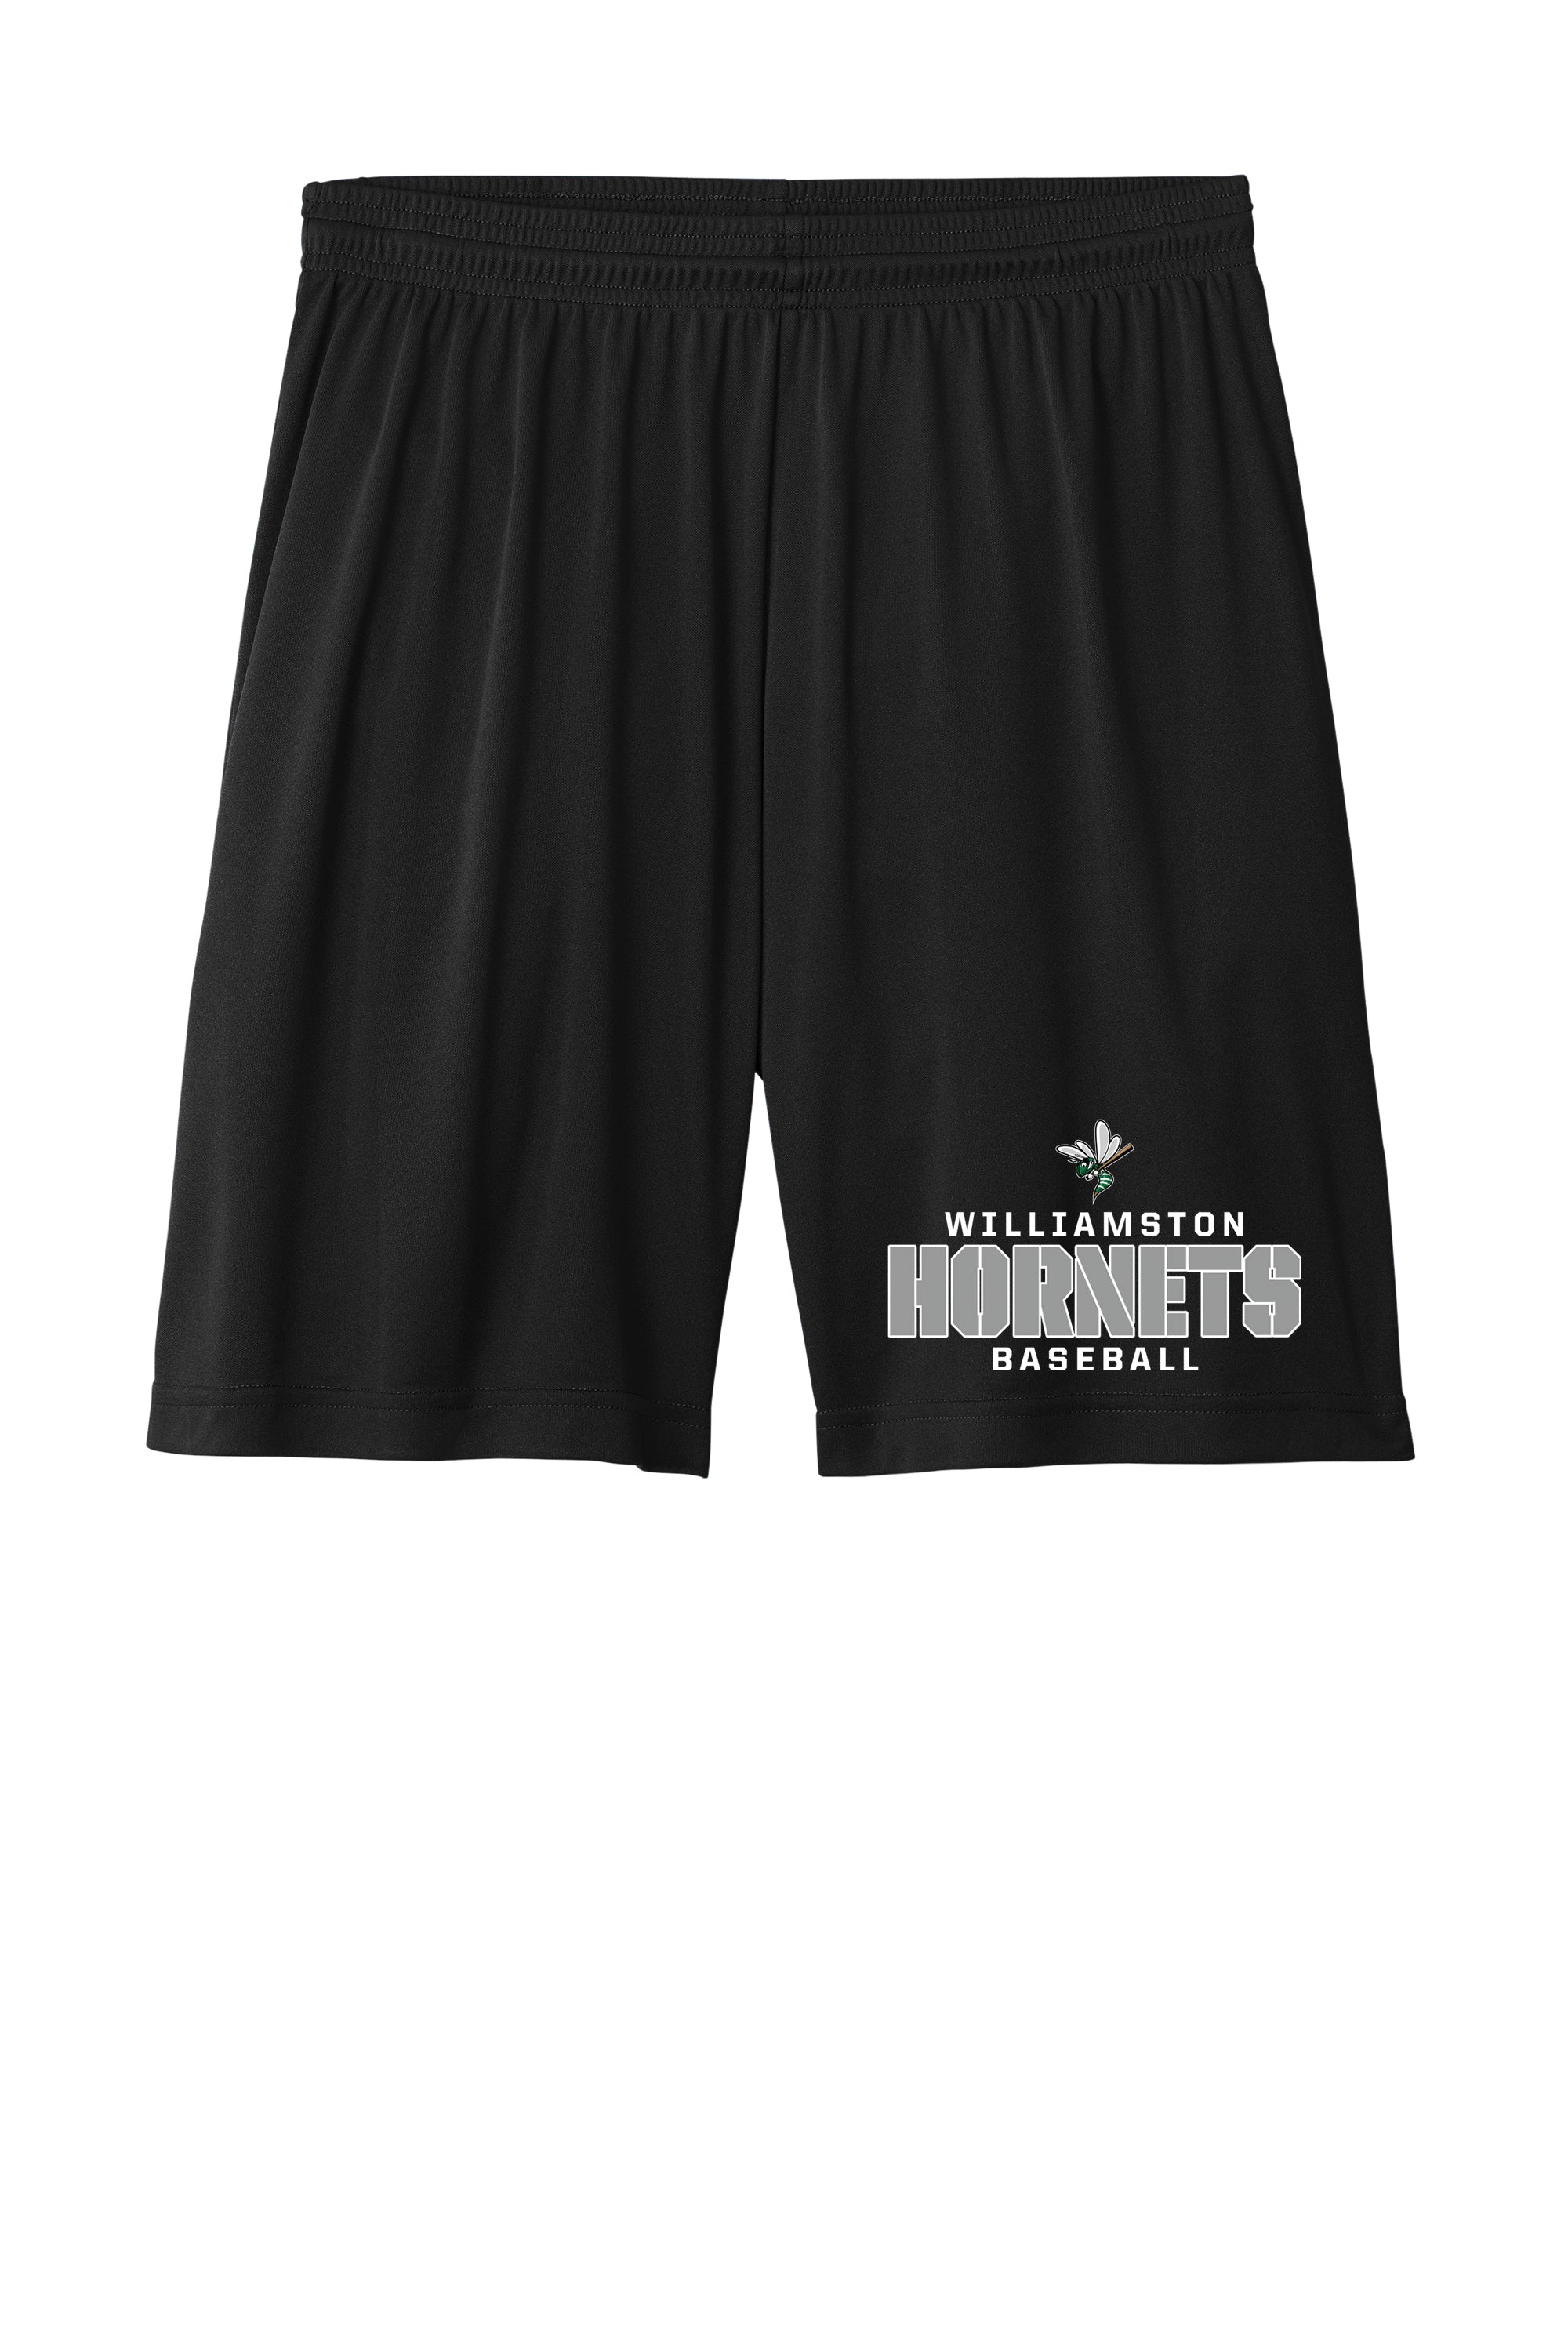 Williamston Baseball - Shorts